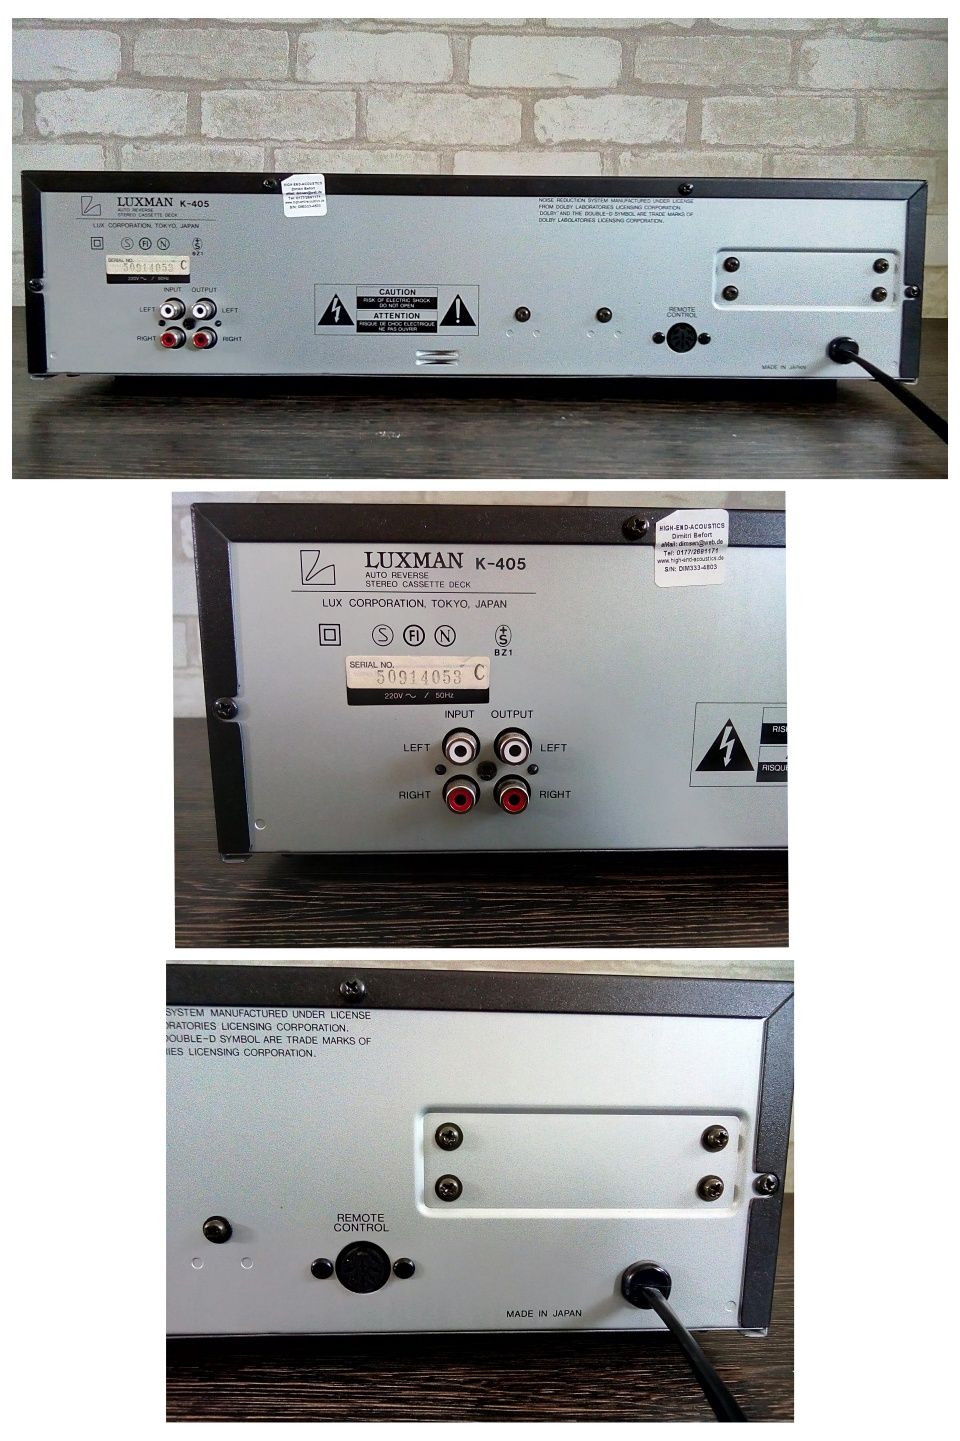 Luxman K-405 Auto Reverse Stereo Cassette Tape Deck 1985-88